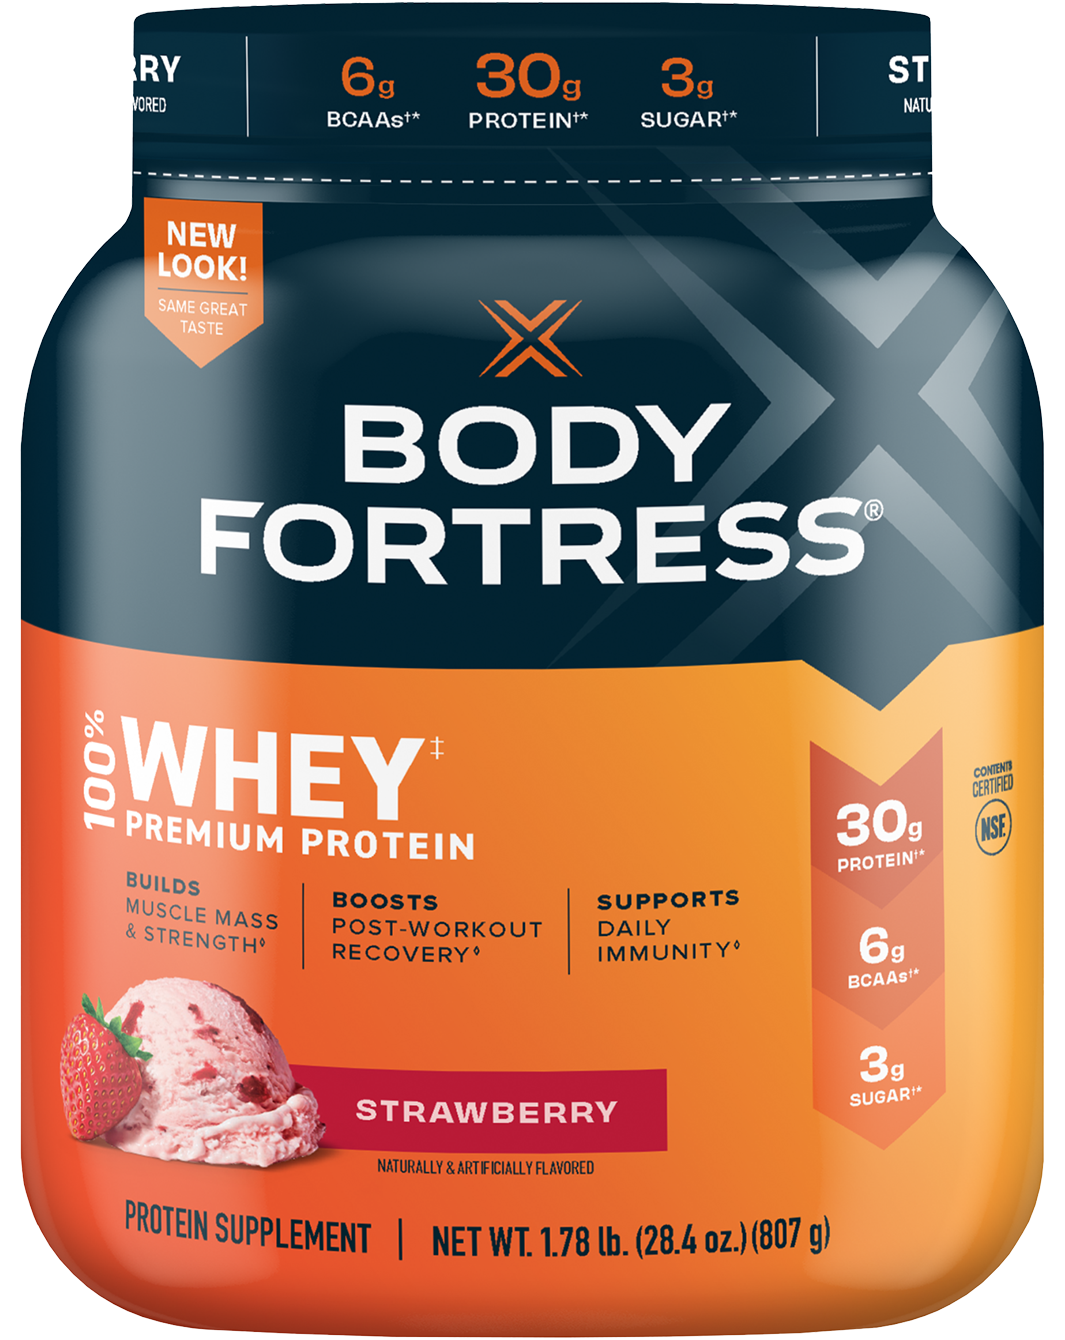 100% Whey, Premium Protein Powder, Strawberry